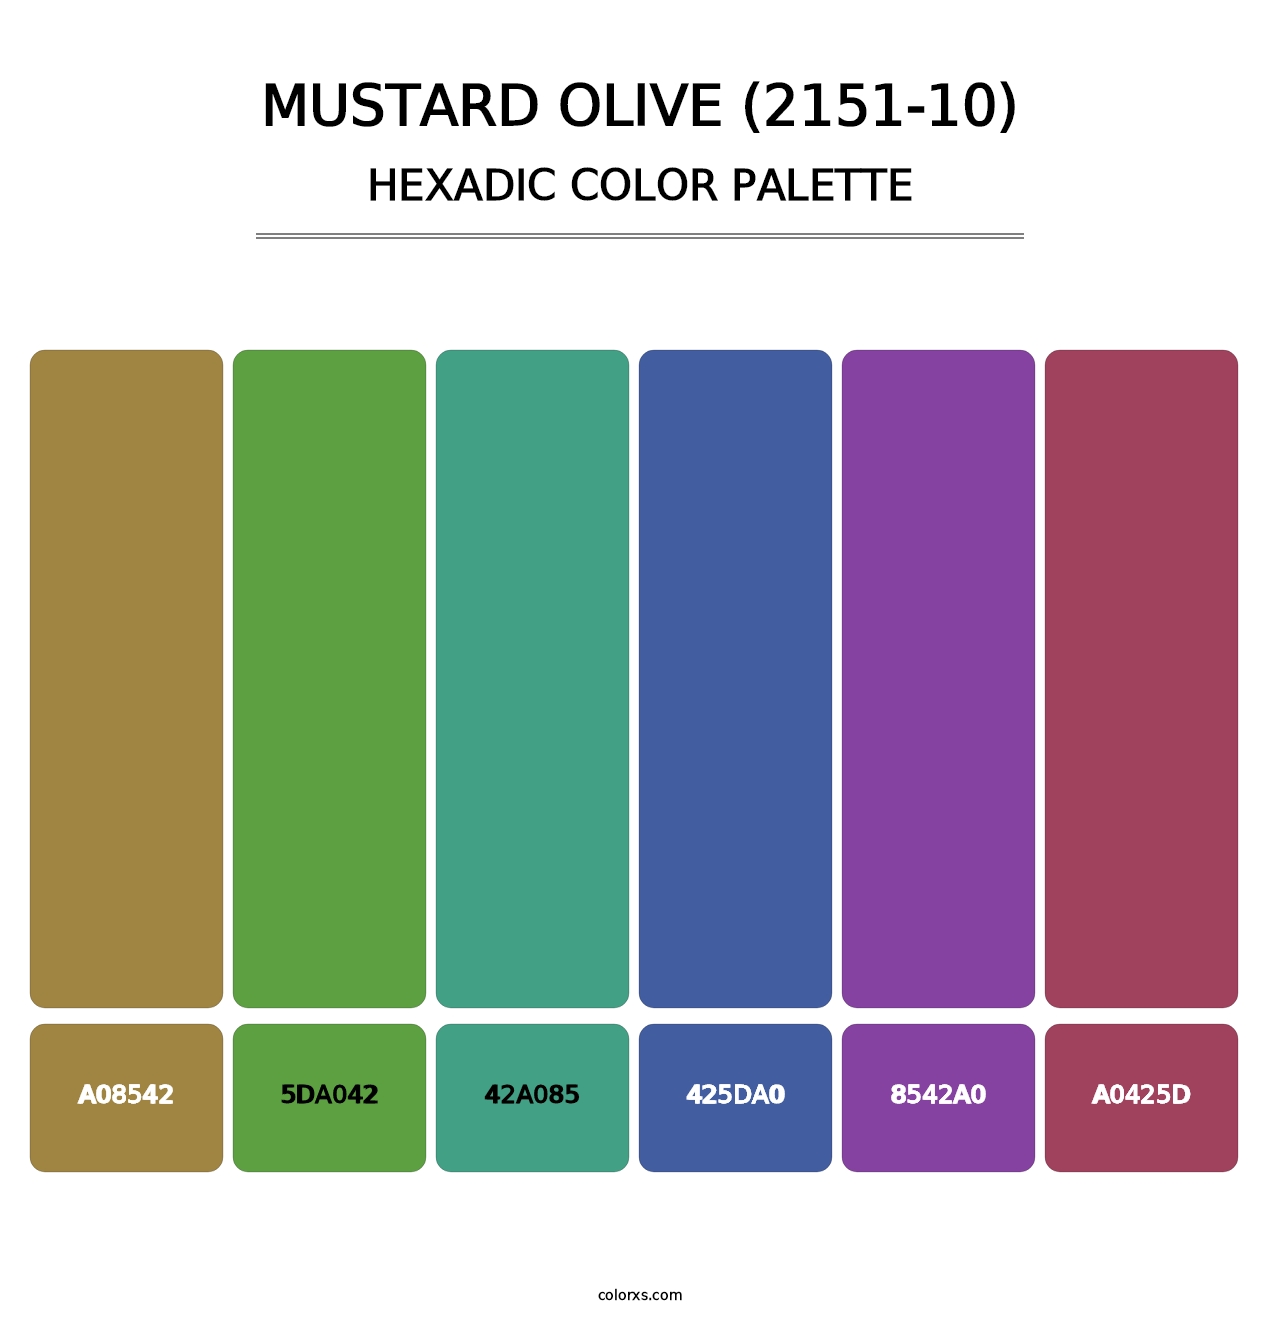 Mustard Olive (2151-10) - Hexadic Color Palette